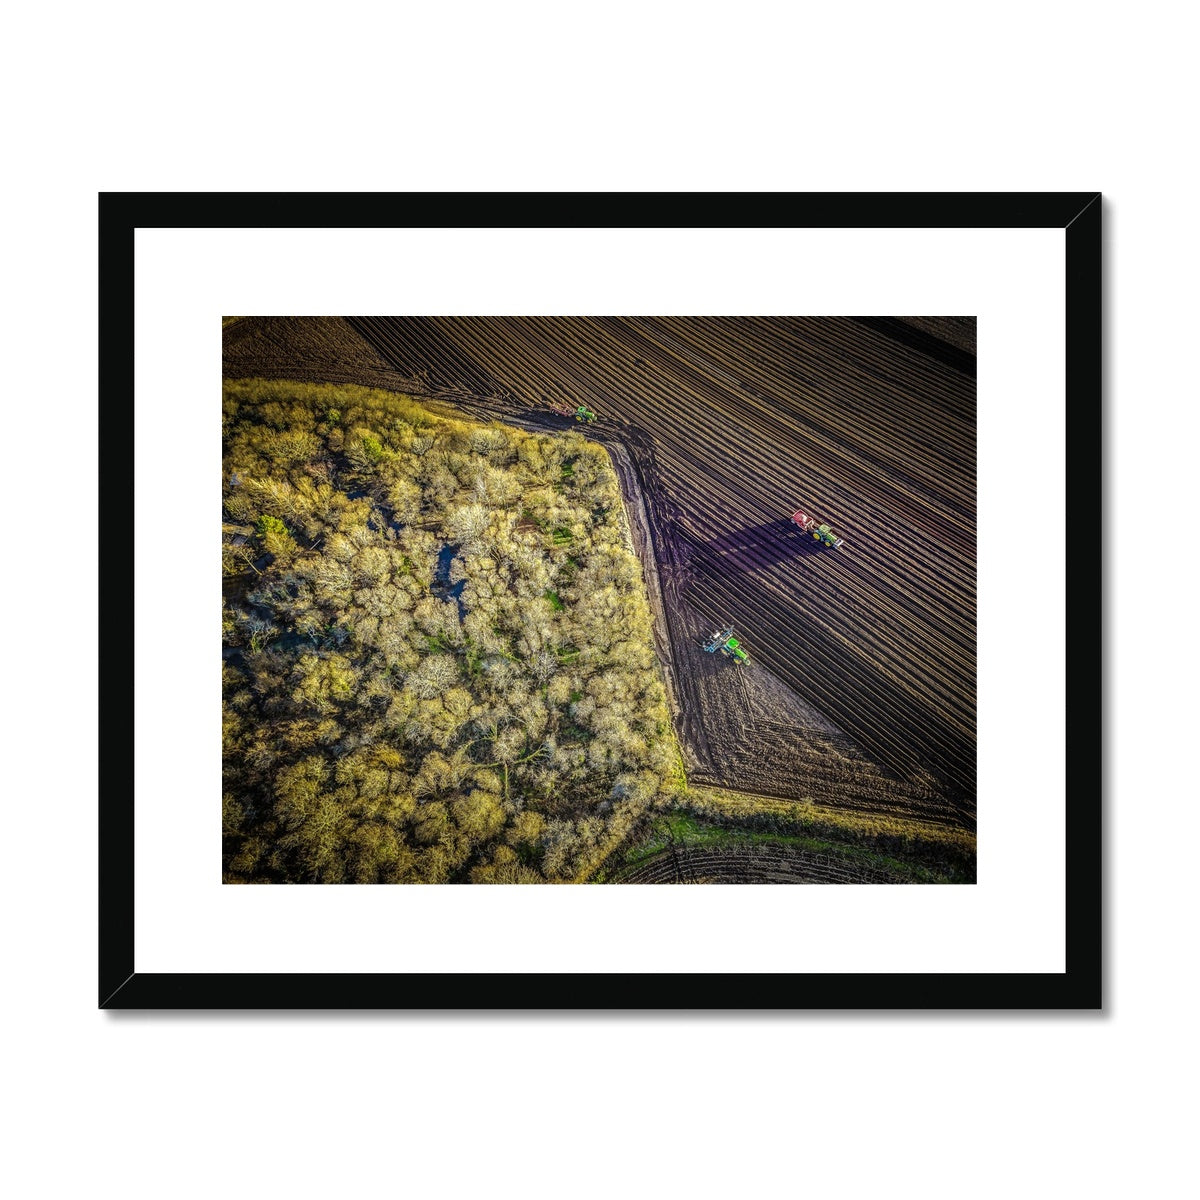 ploughing the fields framed print